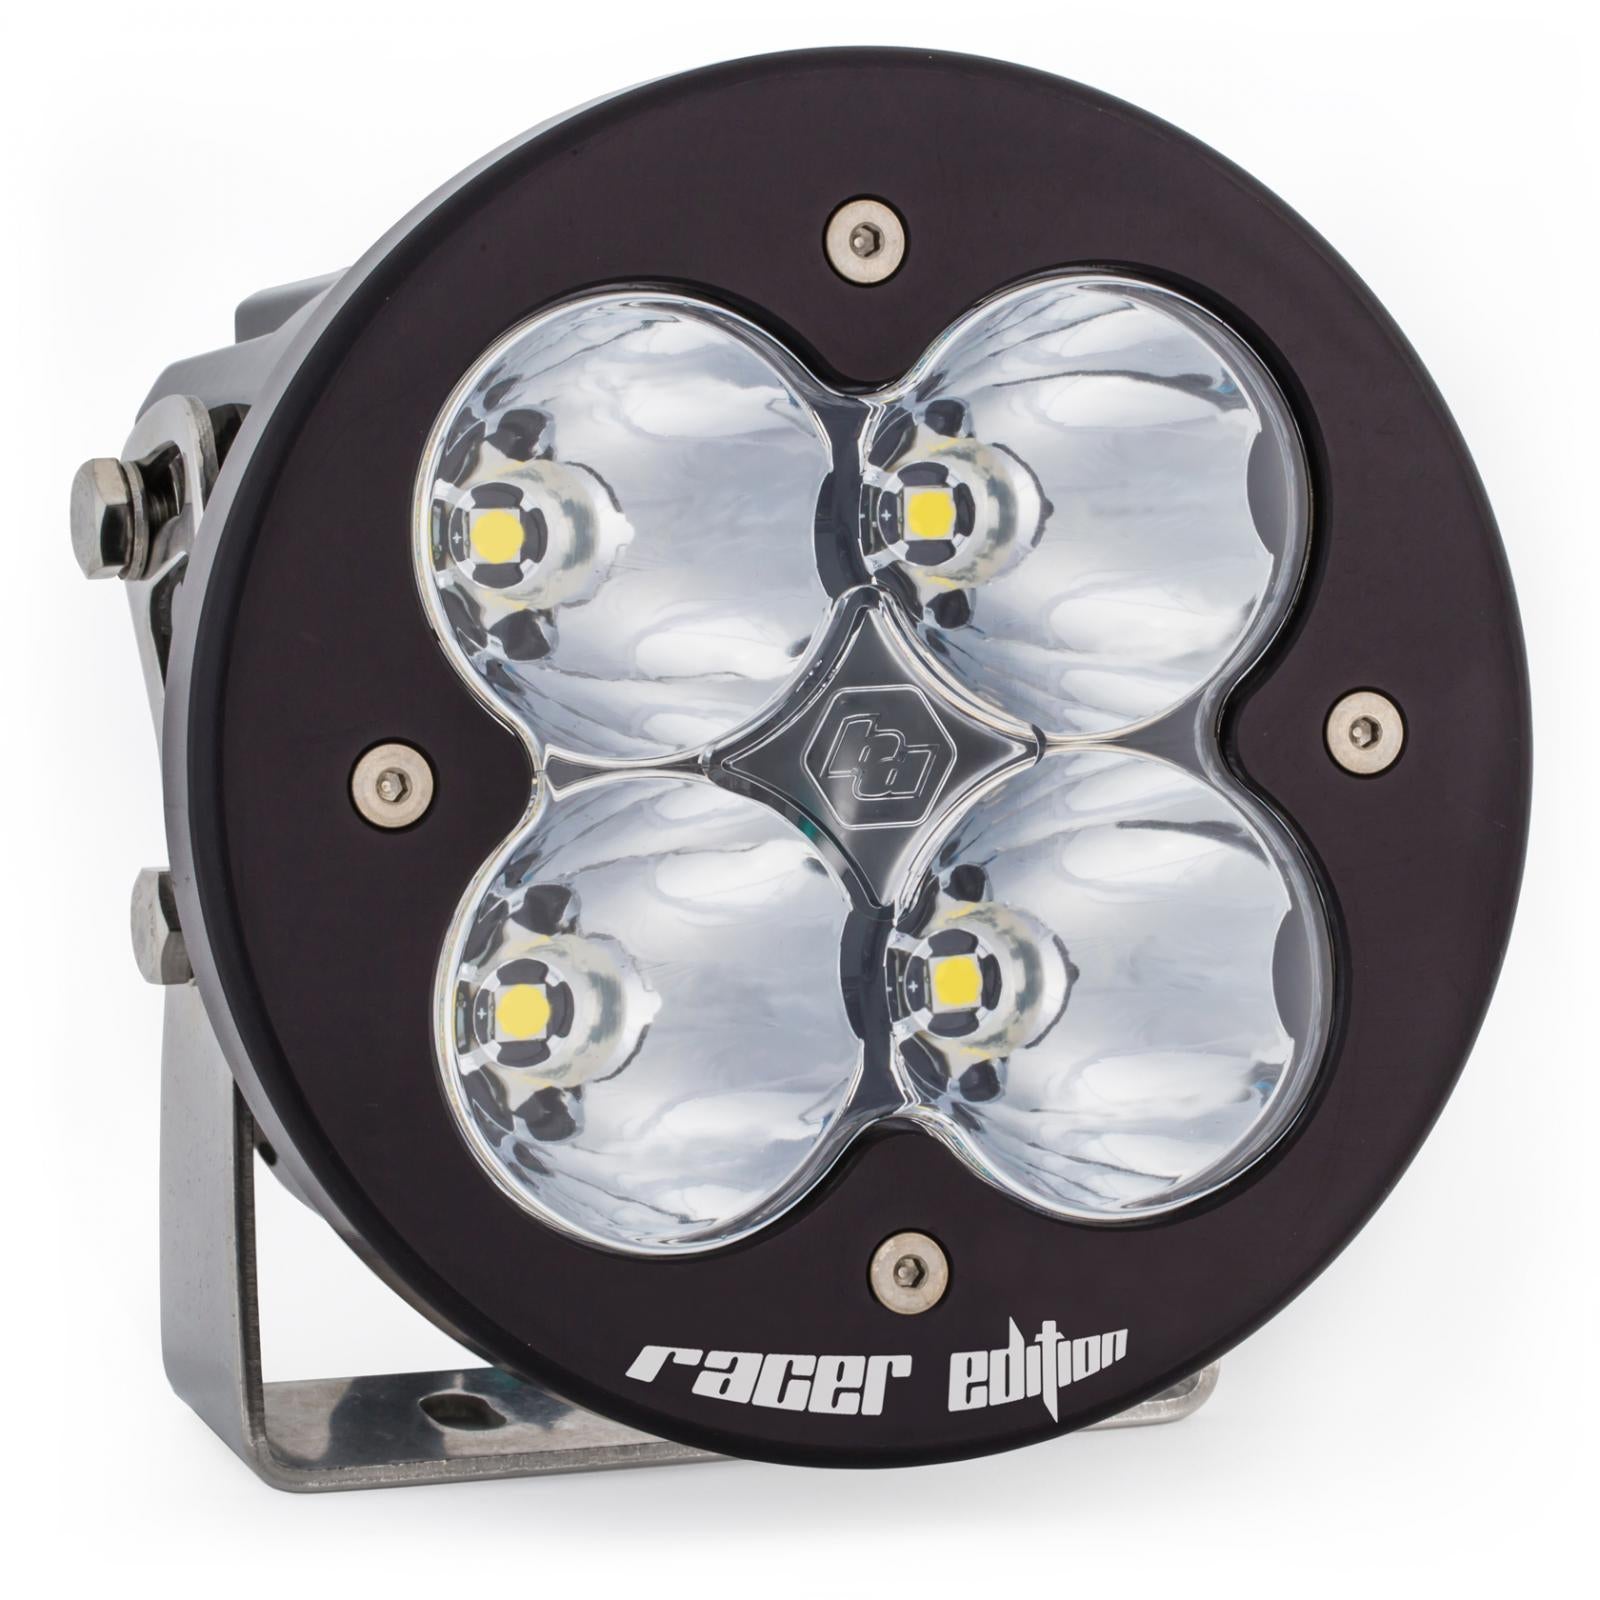 Baja Designs 690002 LED Light Pods Clear Lens Spot Each XL Racer Edition High Speed Baja Designs - Truck Part Superstore